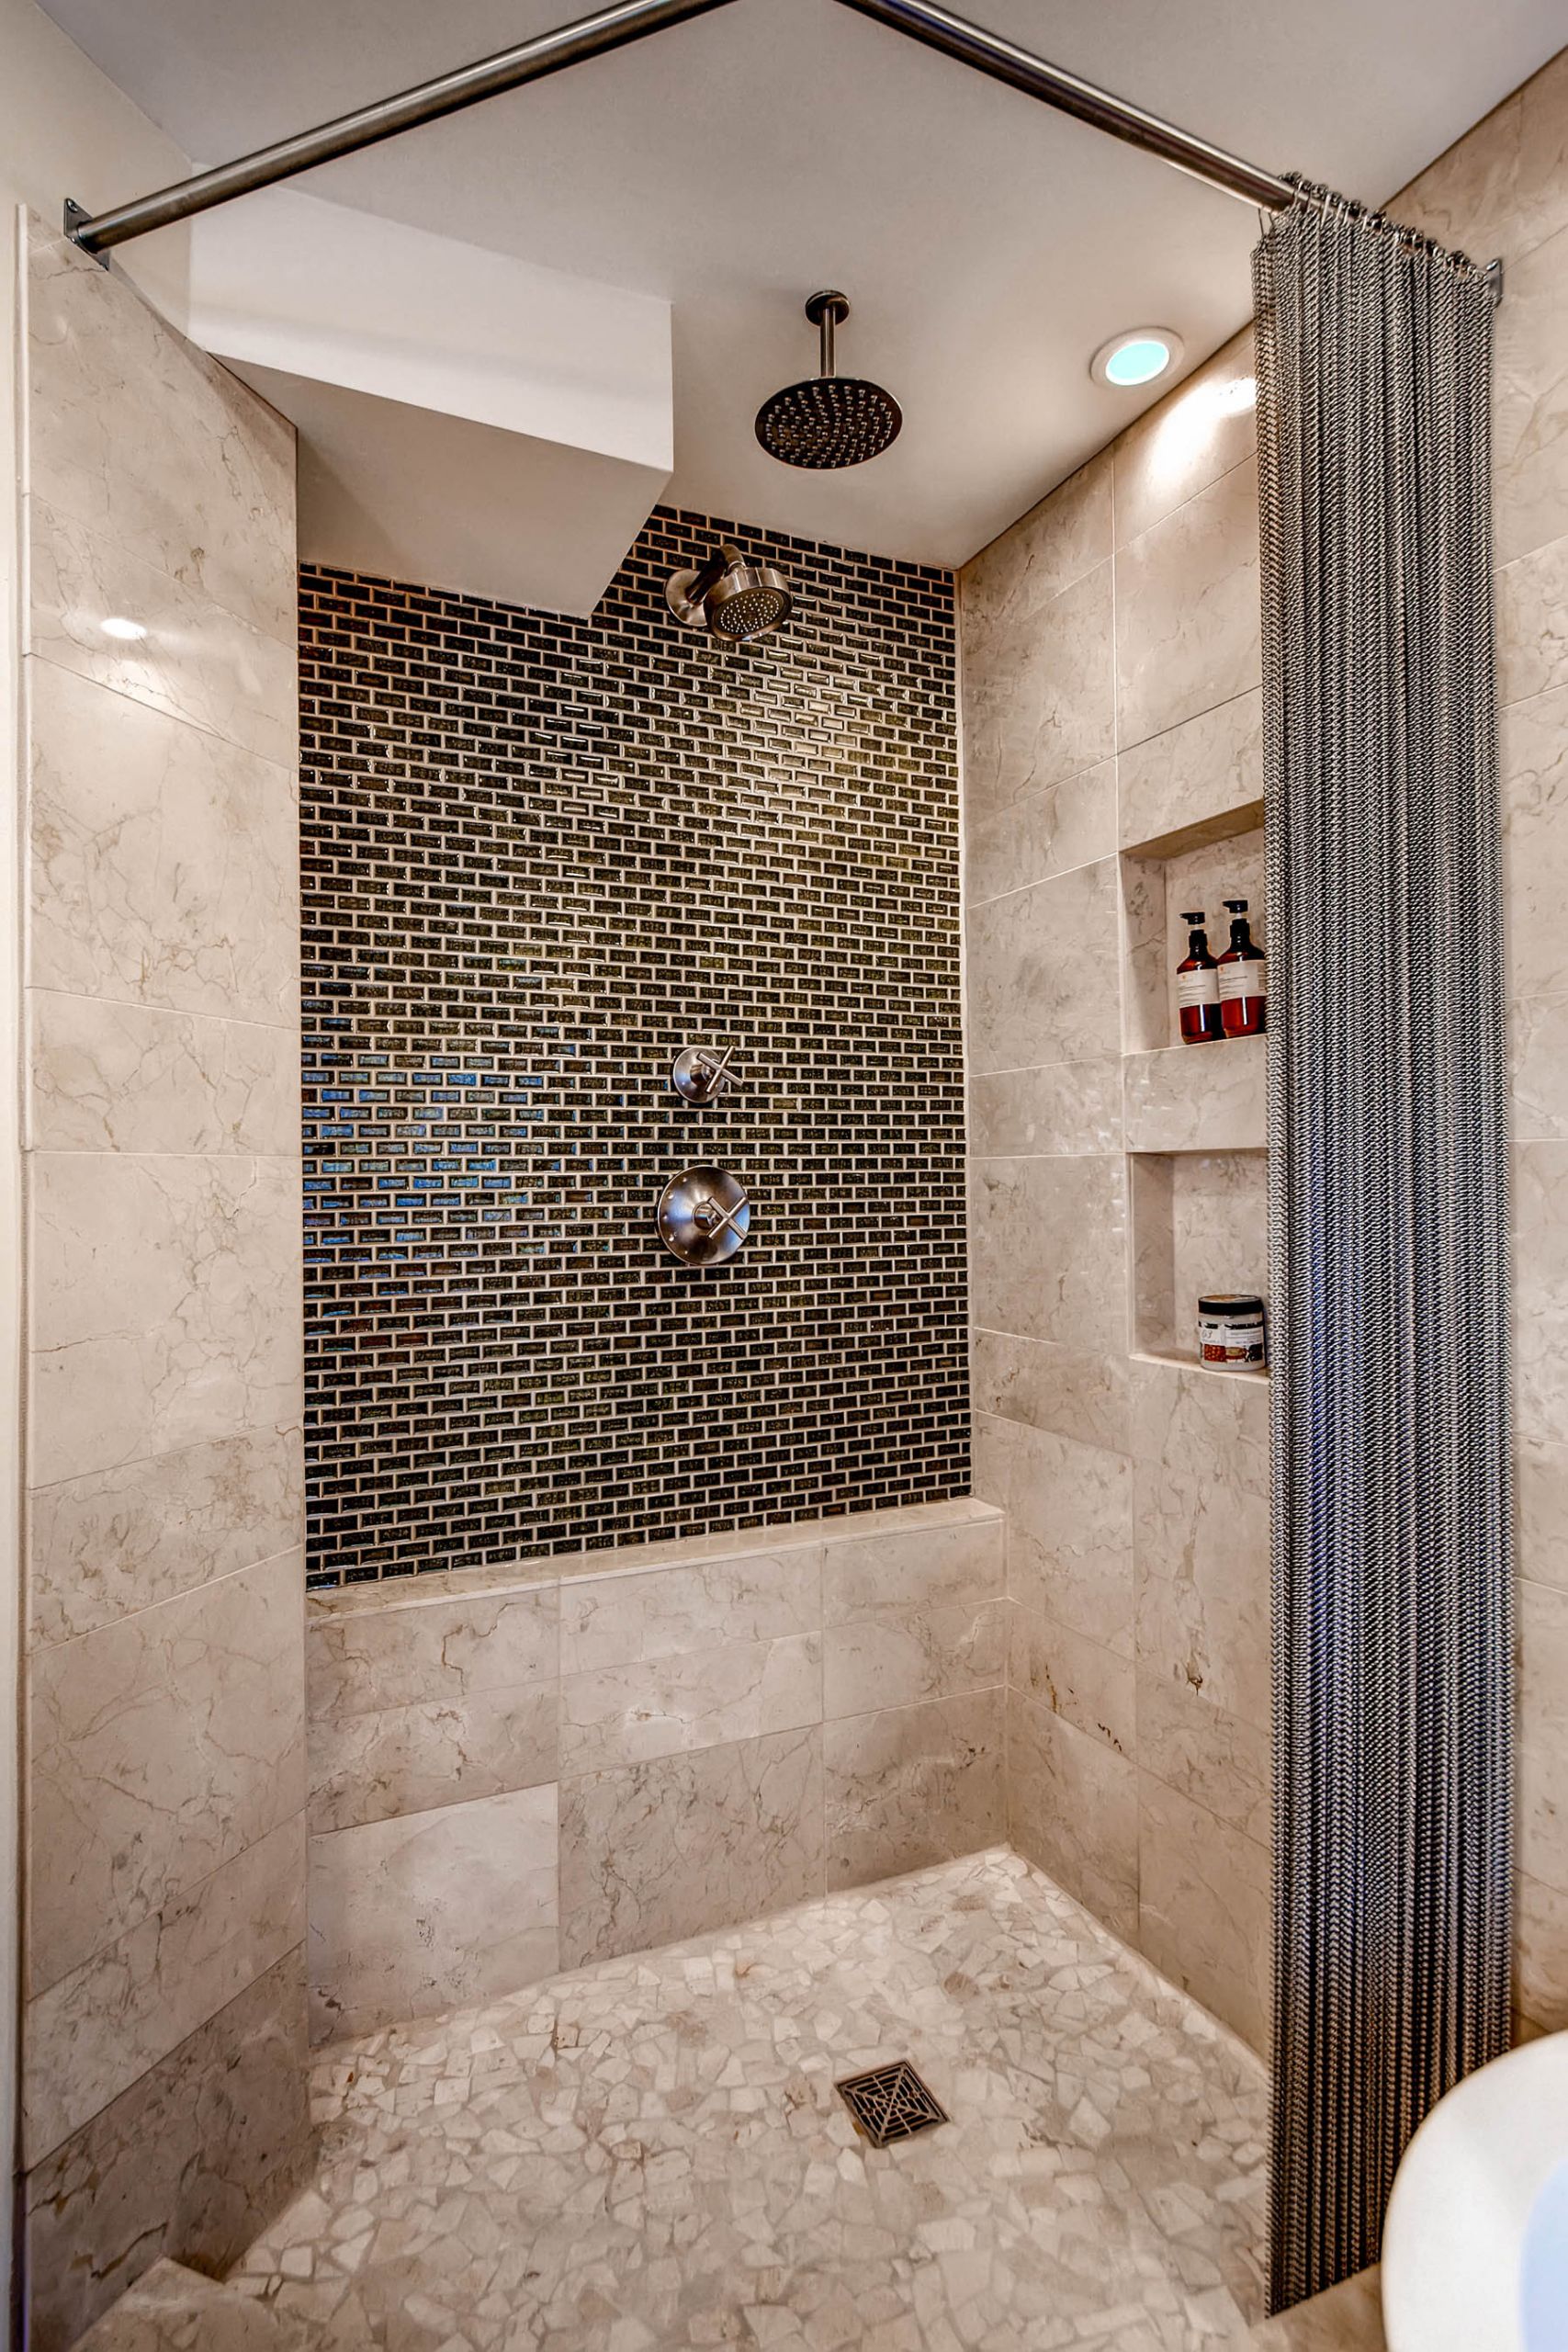 Wall Tile Bathroom
 Spa Like Master Bathroom Remodel